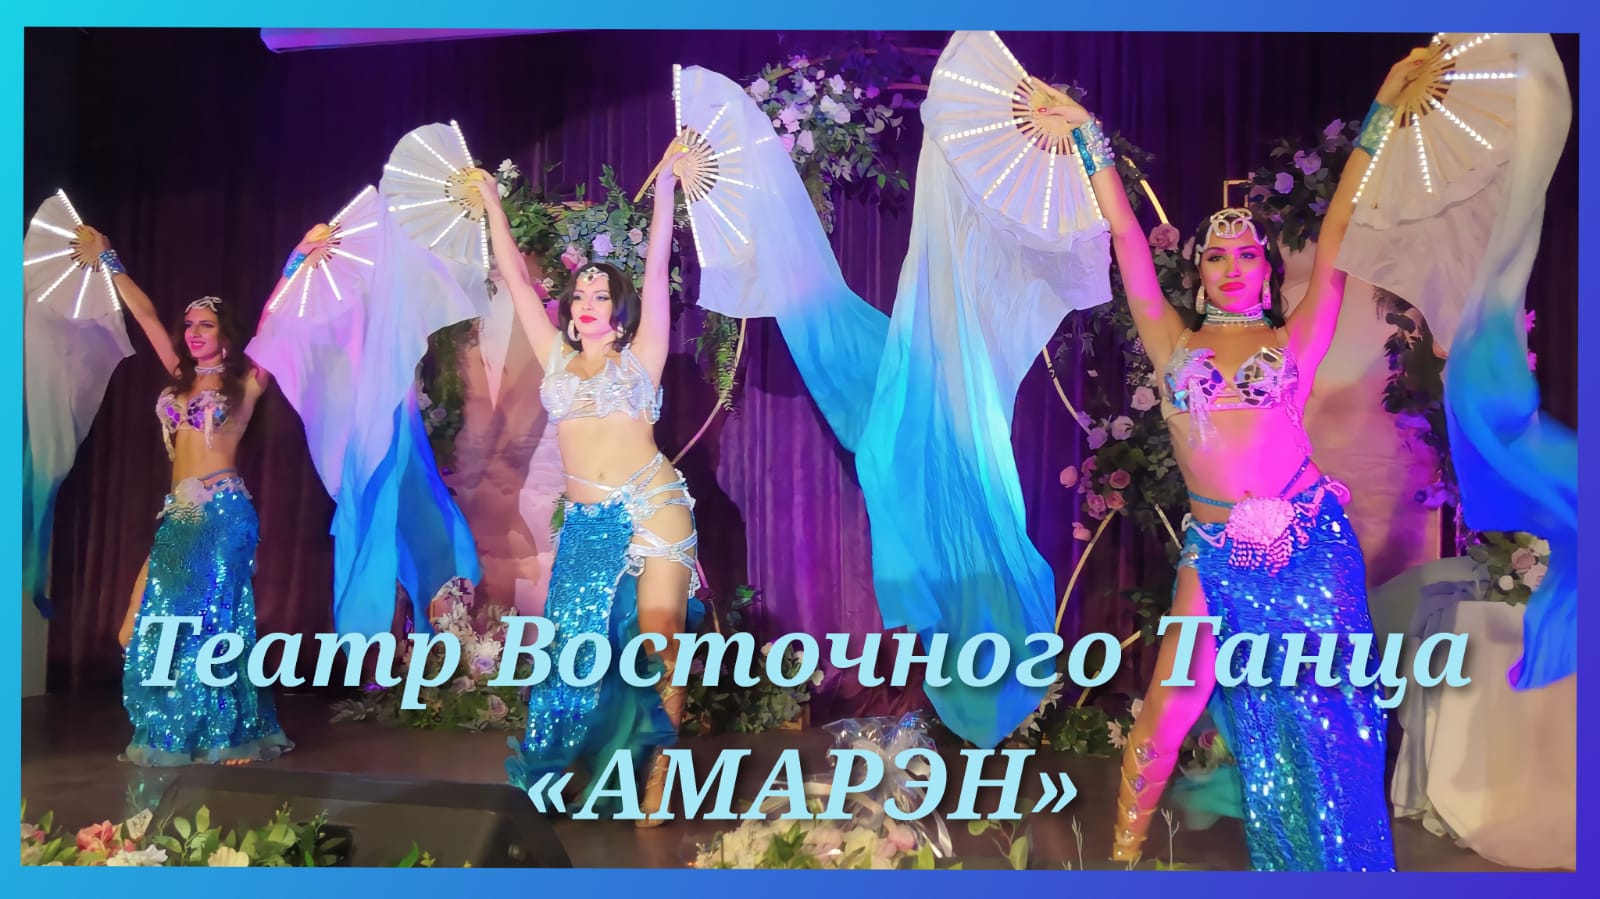 Театр Восточного Танца
«АМАРЭН»